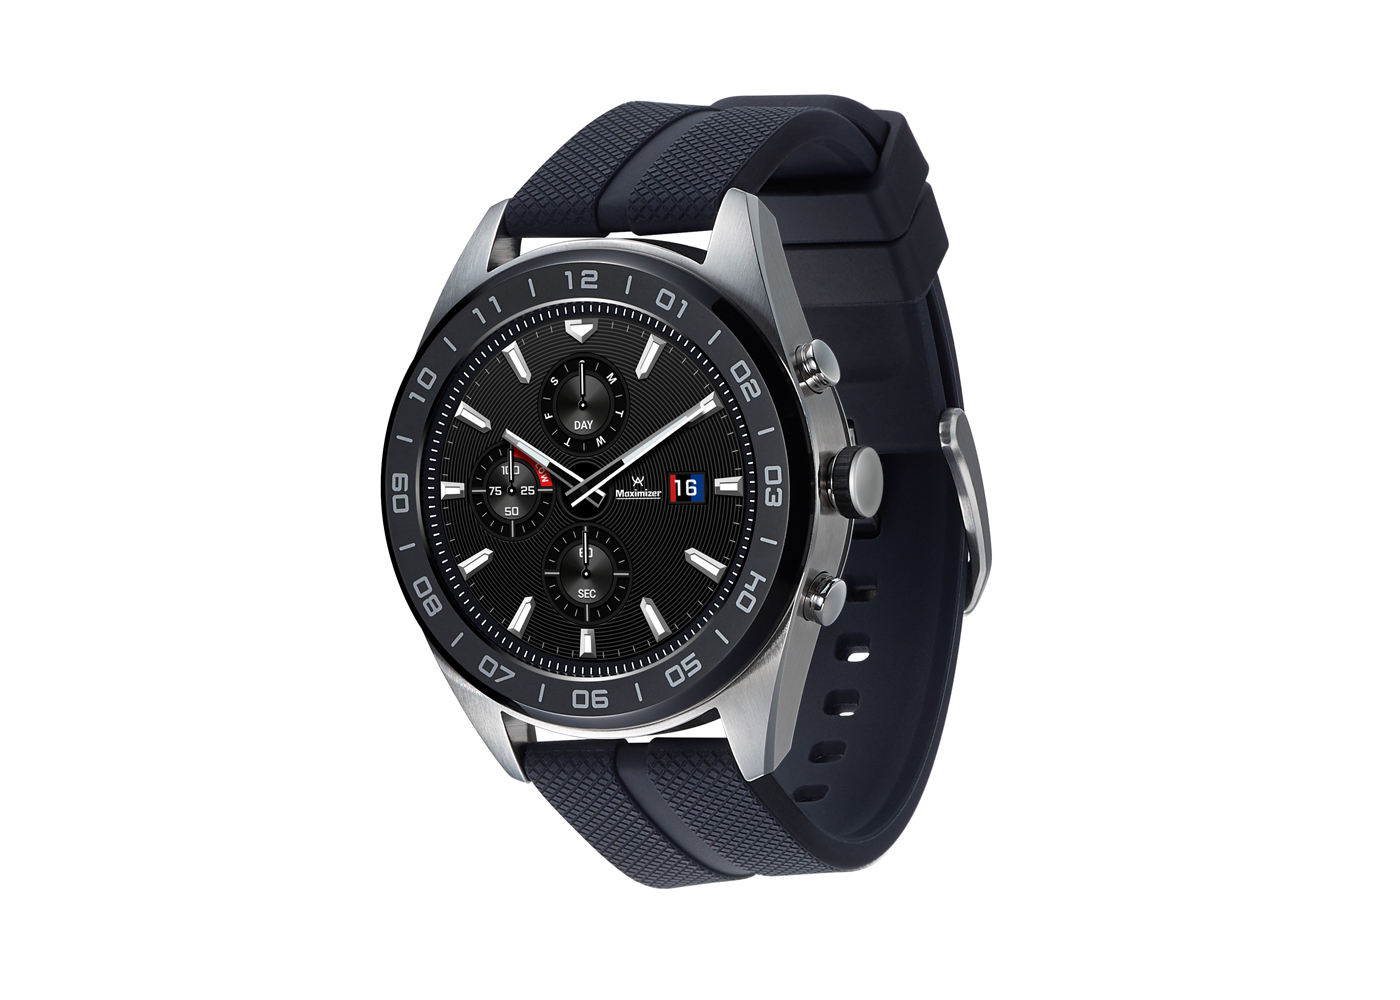 LG ilk hibrit saatini tanıttı: İşte karşınızda LG Watch W7